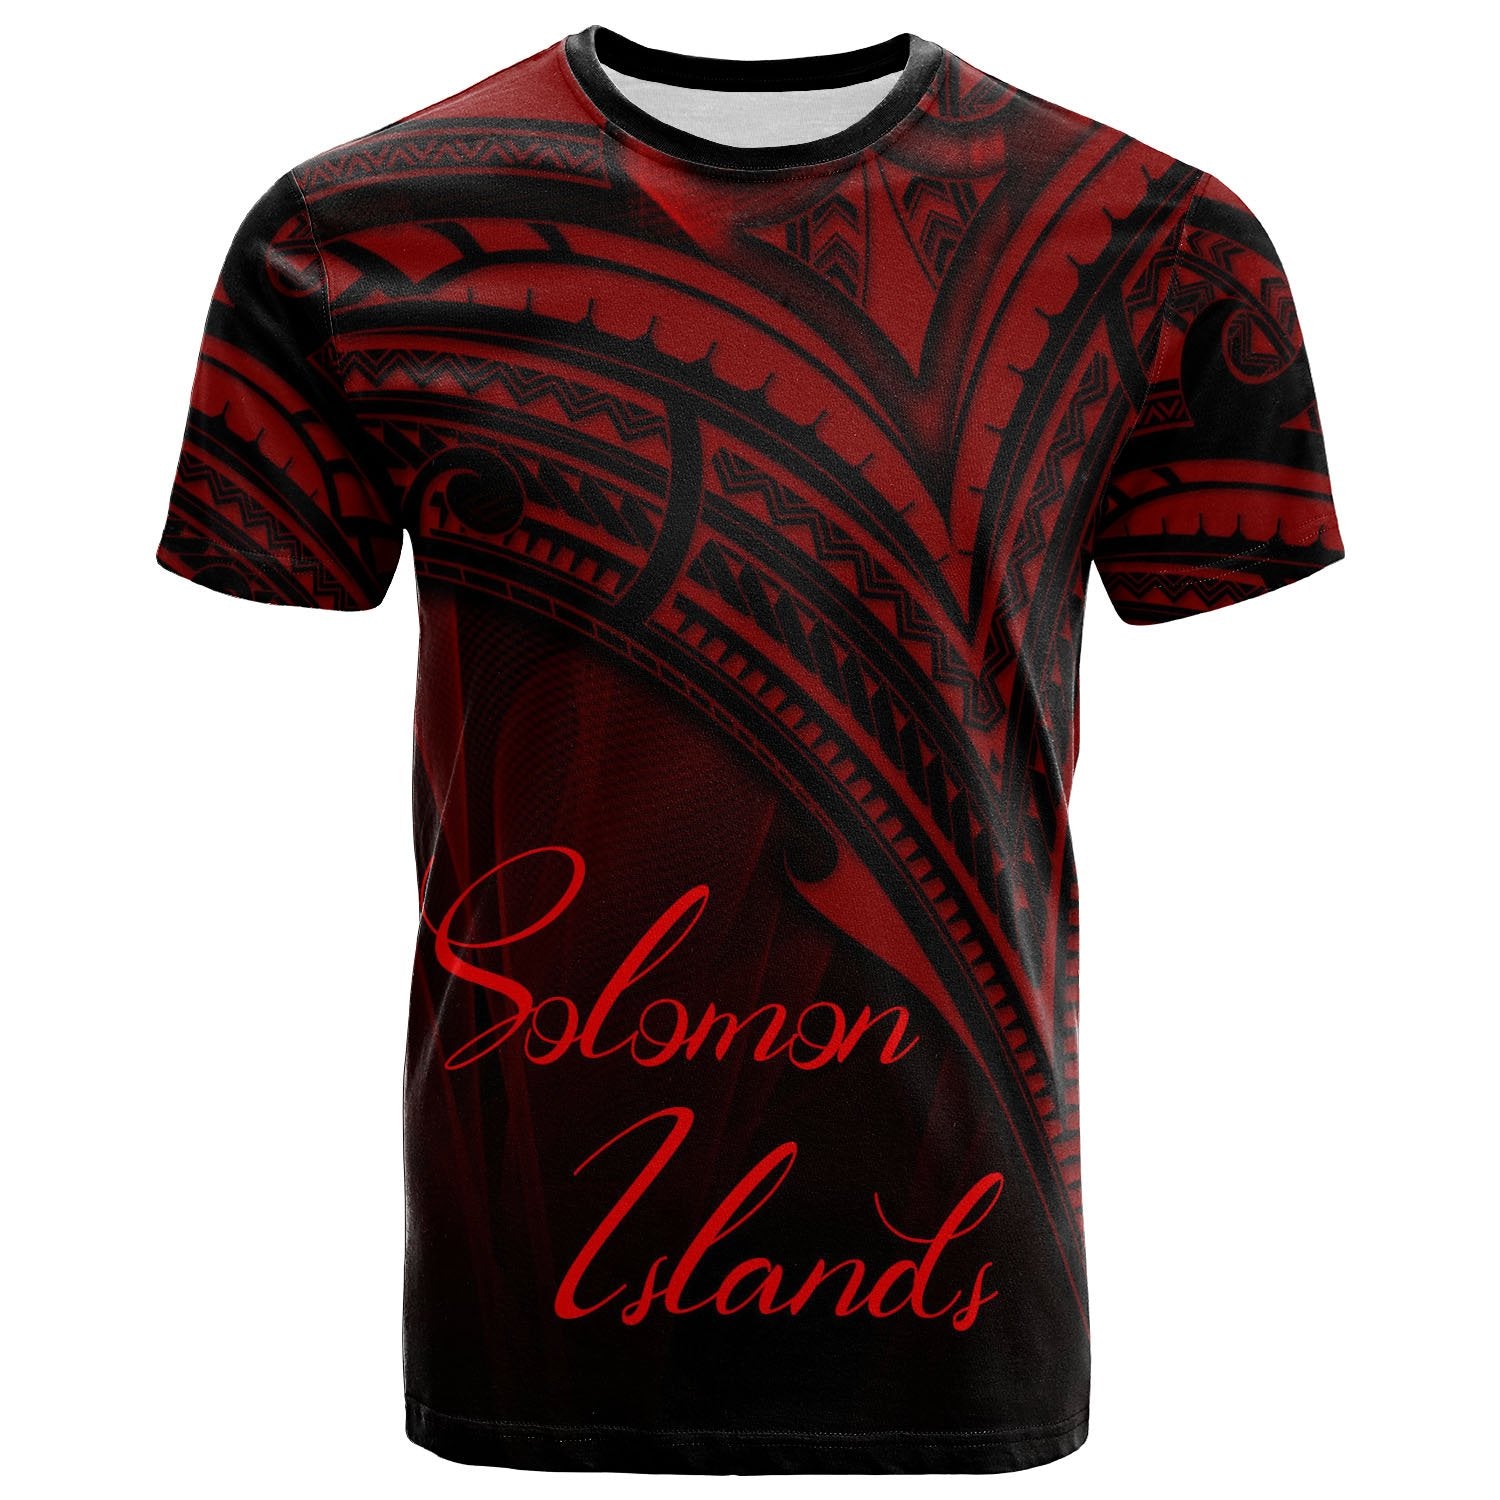 Solomon Islands T Shirt Red Color Cross Style Unisex Black - Polynesian Pride